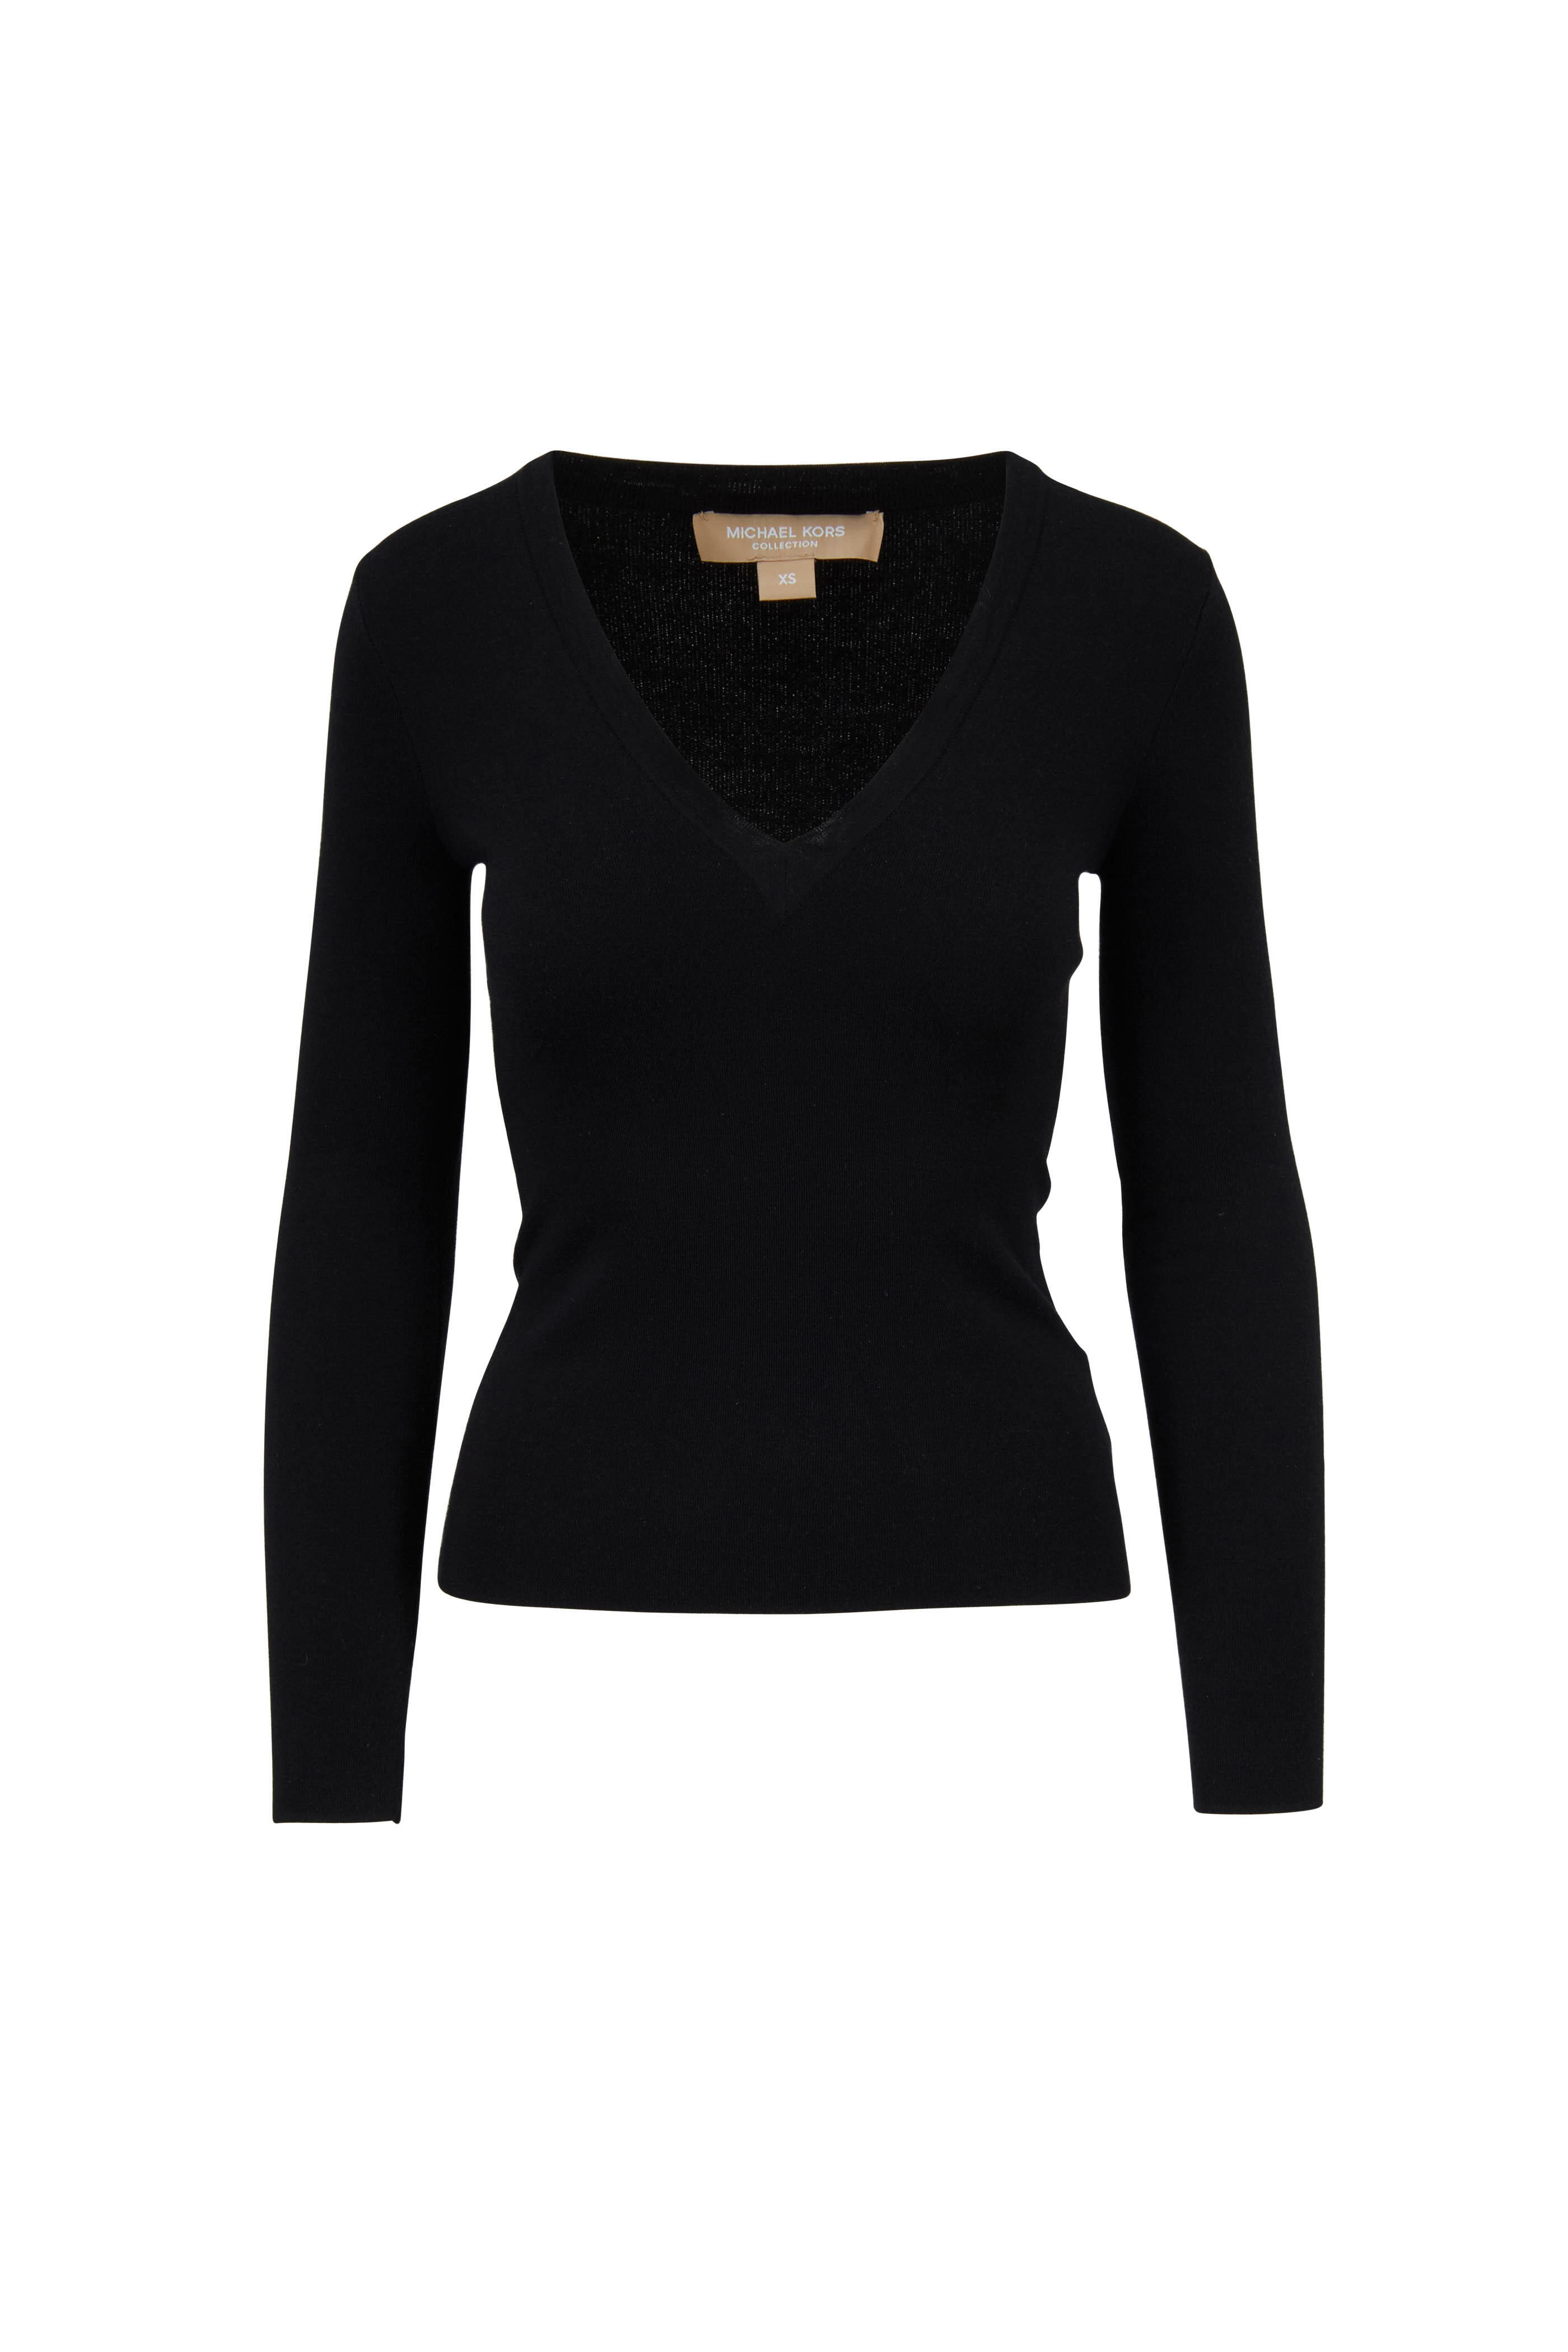 Michael Kors Collection - Black Cashmere V-Neck Sweater